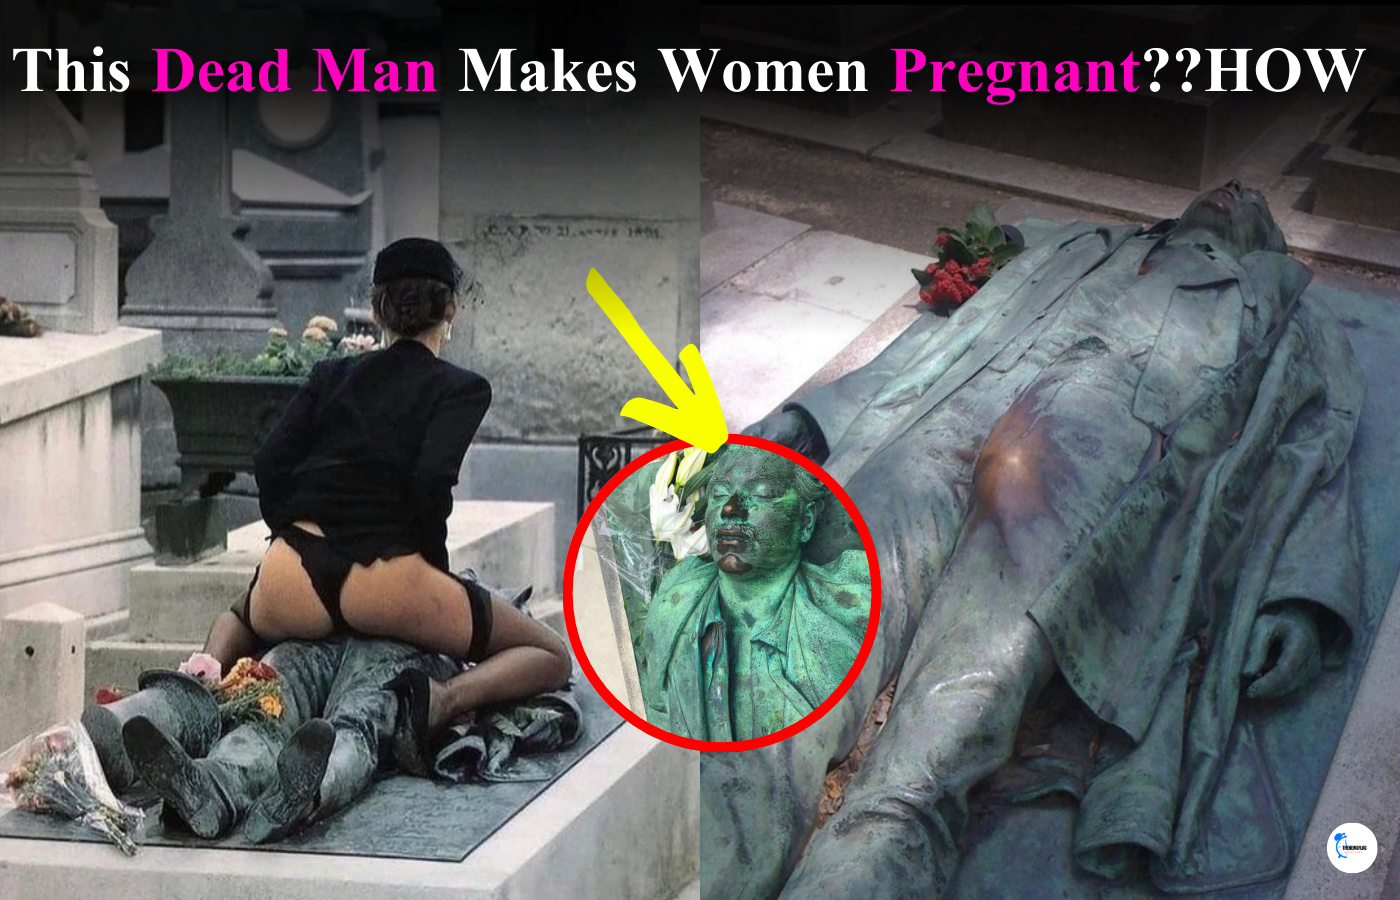 a dead body making women pregnant